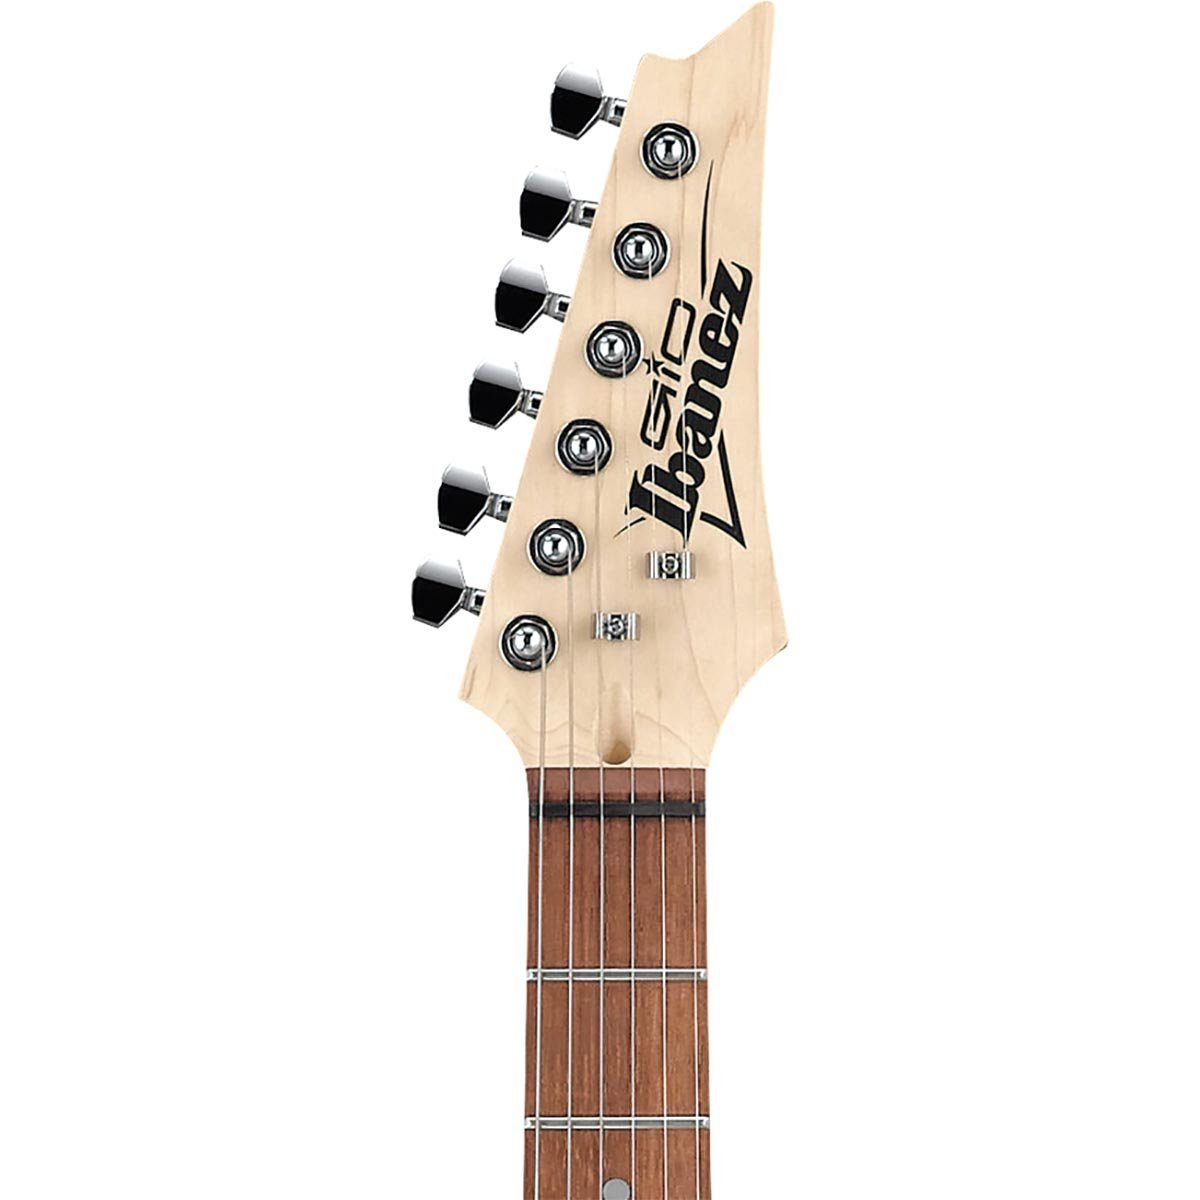 Ibanez GRX40 Electric Guitar